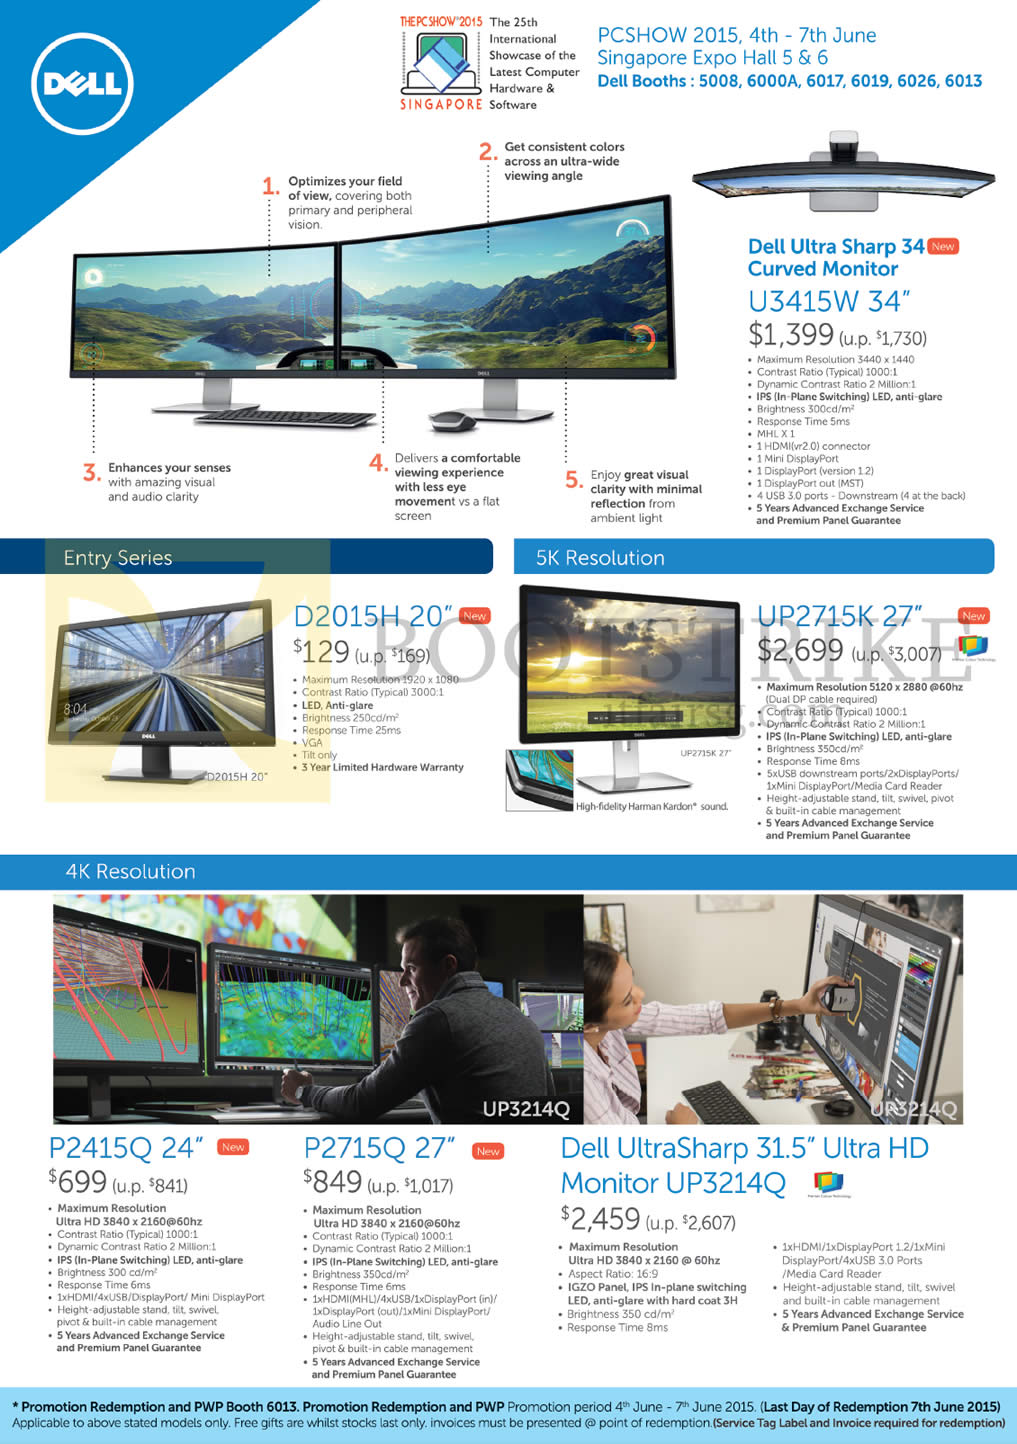 PC SHOW 2015 price list image brochure of Dell Monitors U3415W, D2015H, UP2715K, P2415Q, P2715Q, UP3214Q